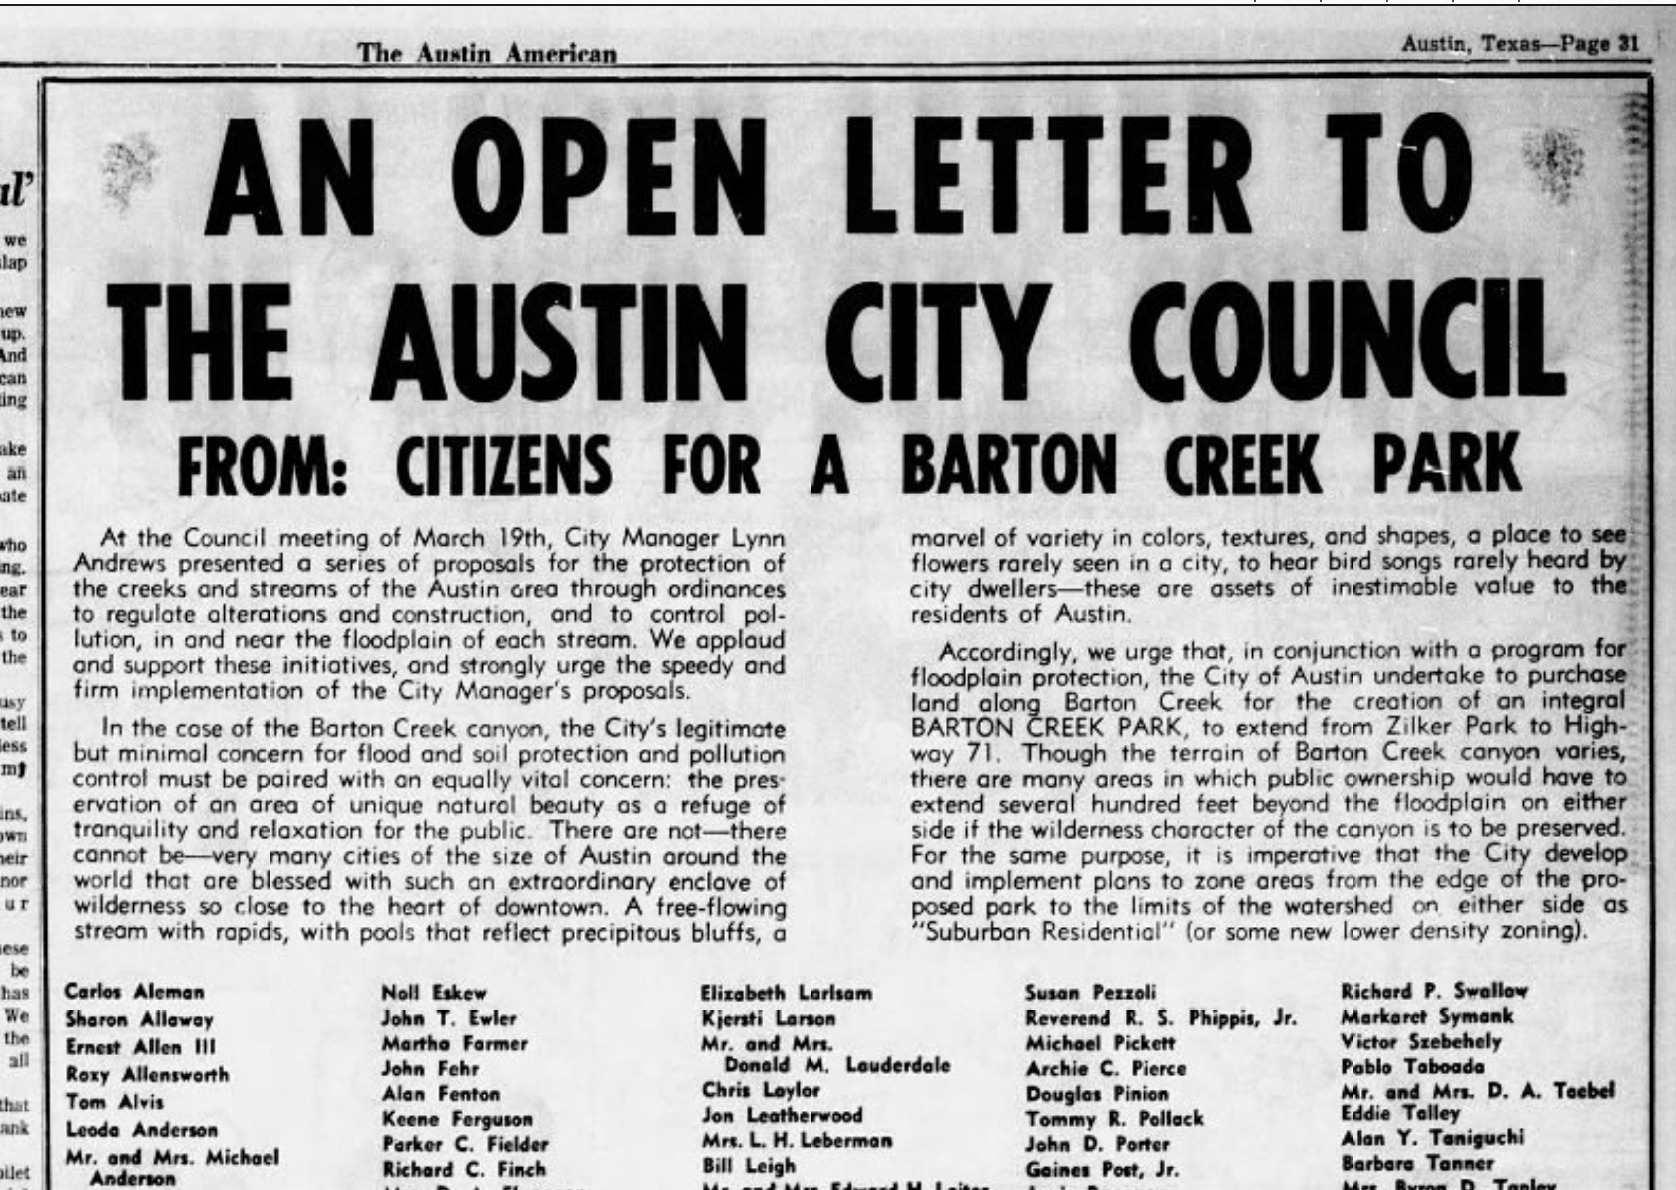 Petition Published by Citizens for a Barton Creek Park (Austin American-Statesman, April 13, 1970 )